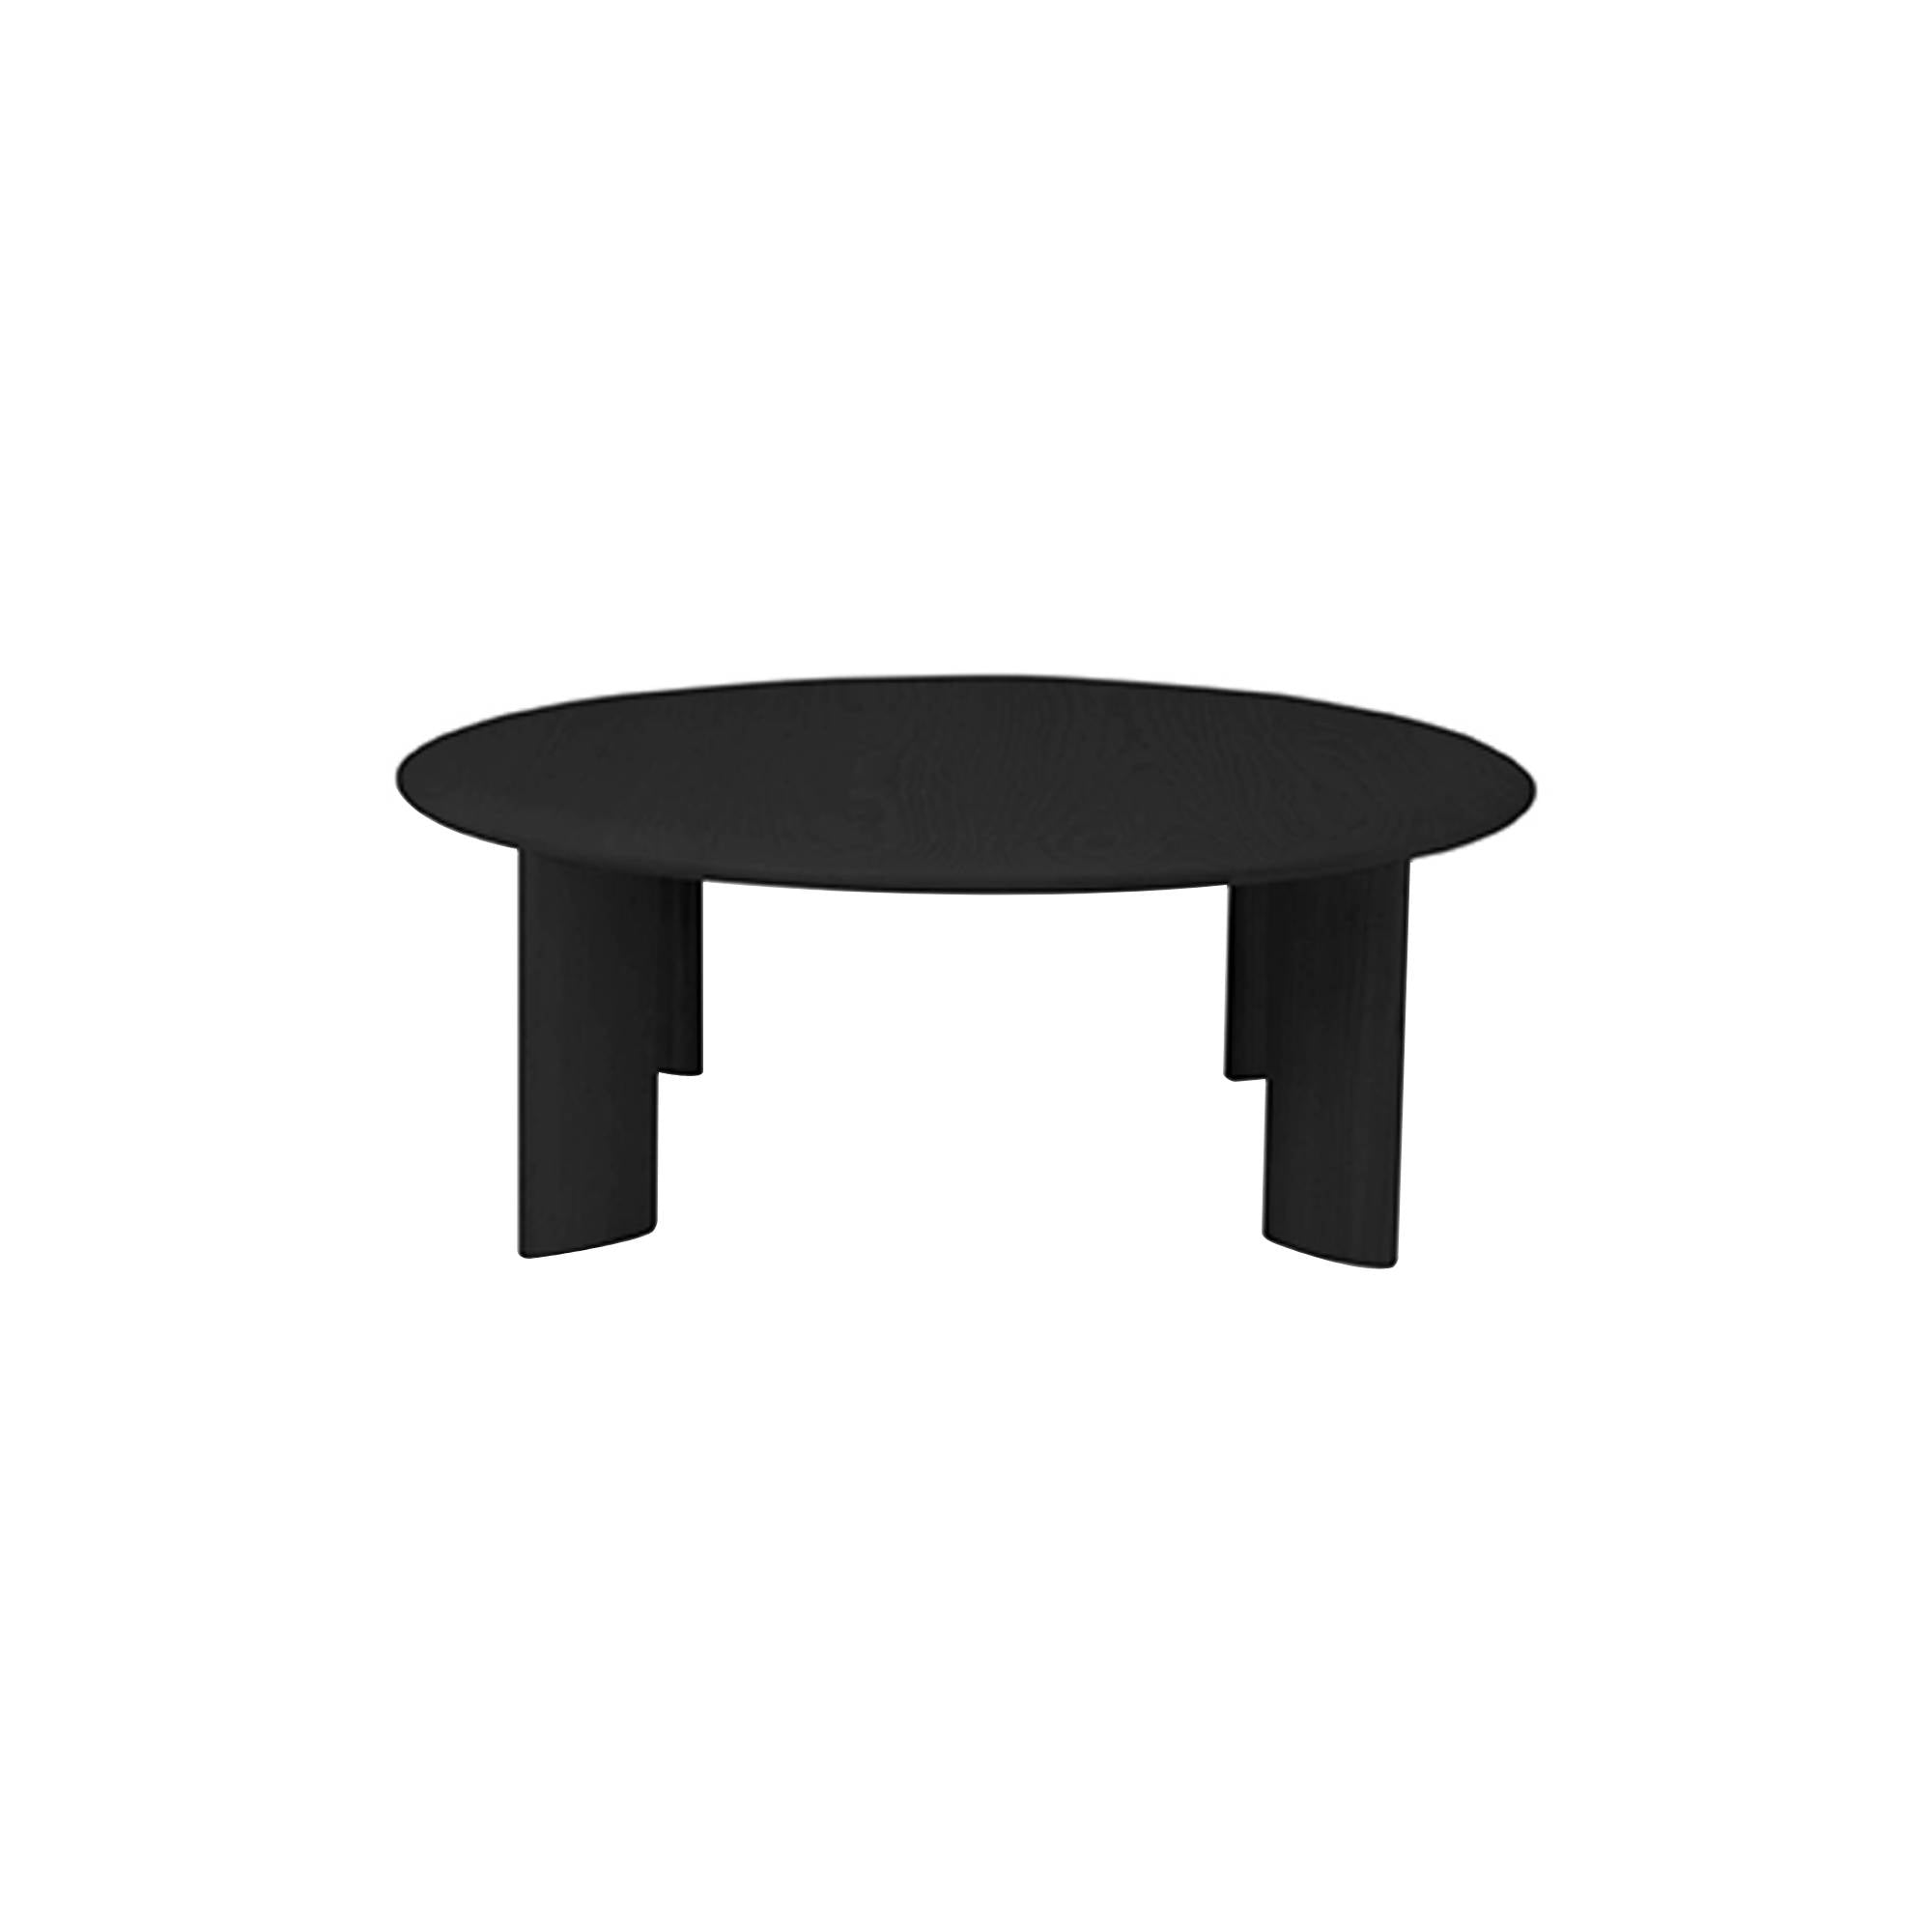 IO Coffee Table: Small + Black